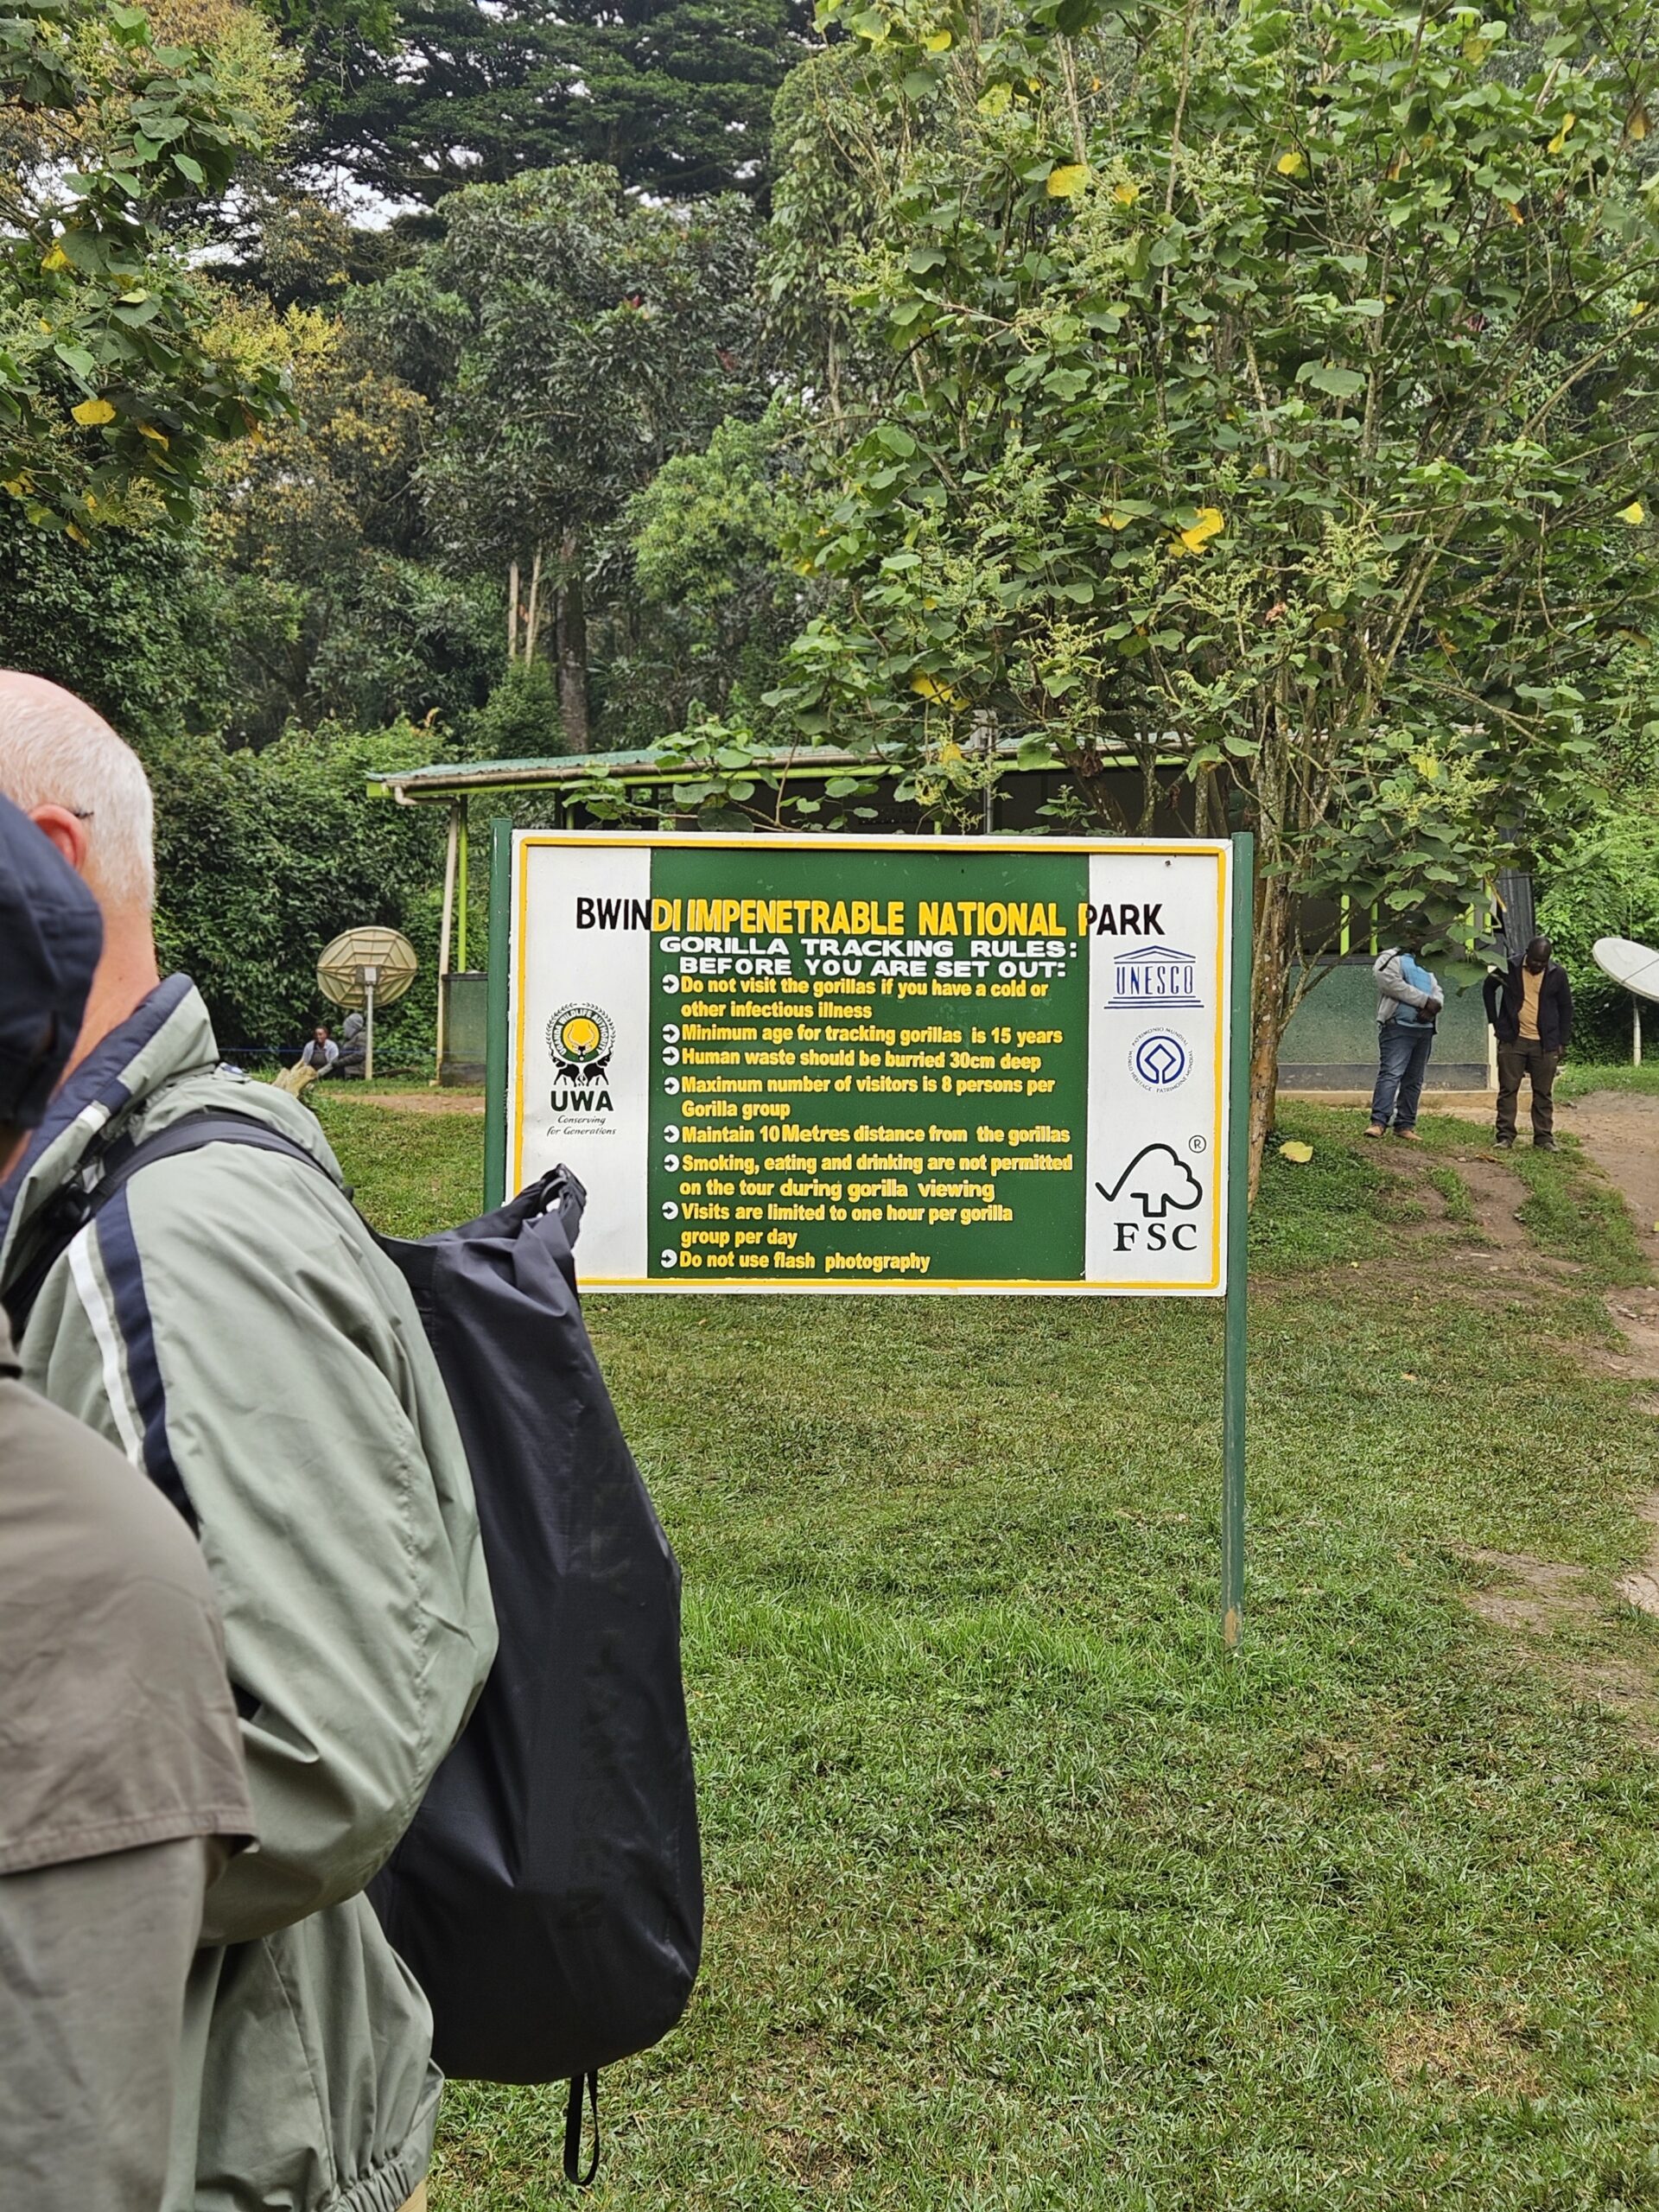 Is it safe to go gorilla trekking in Uganda?